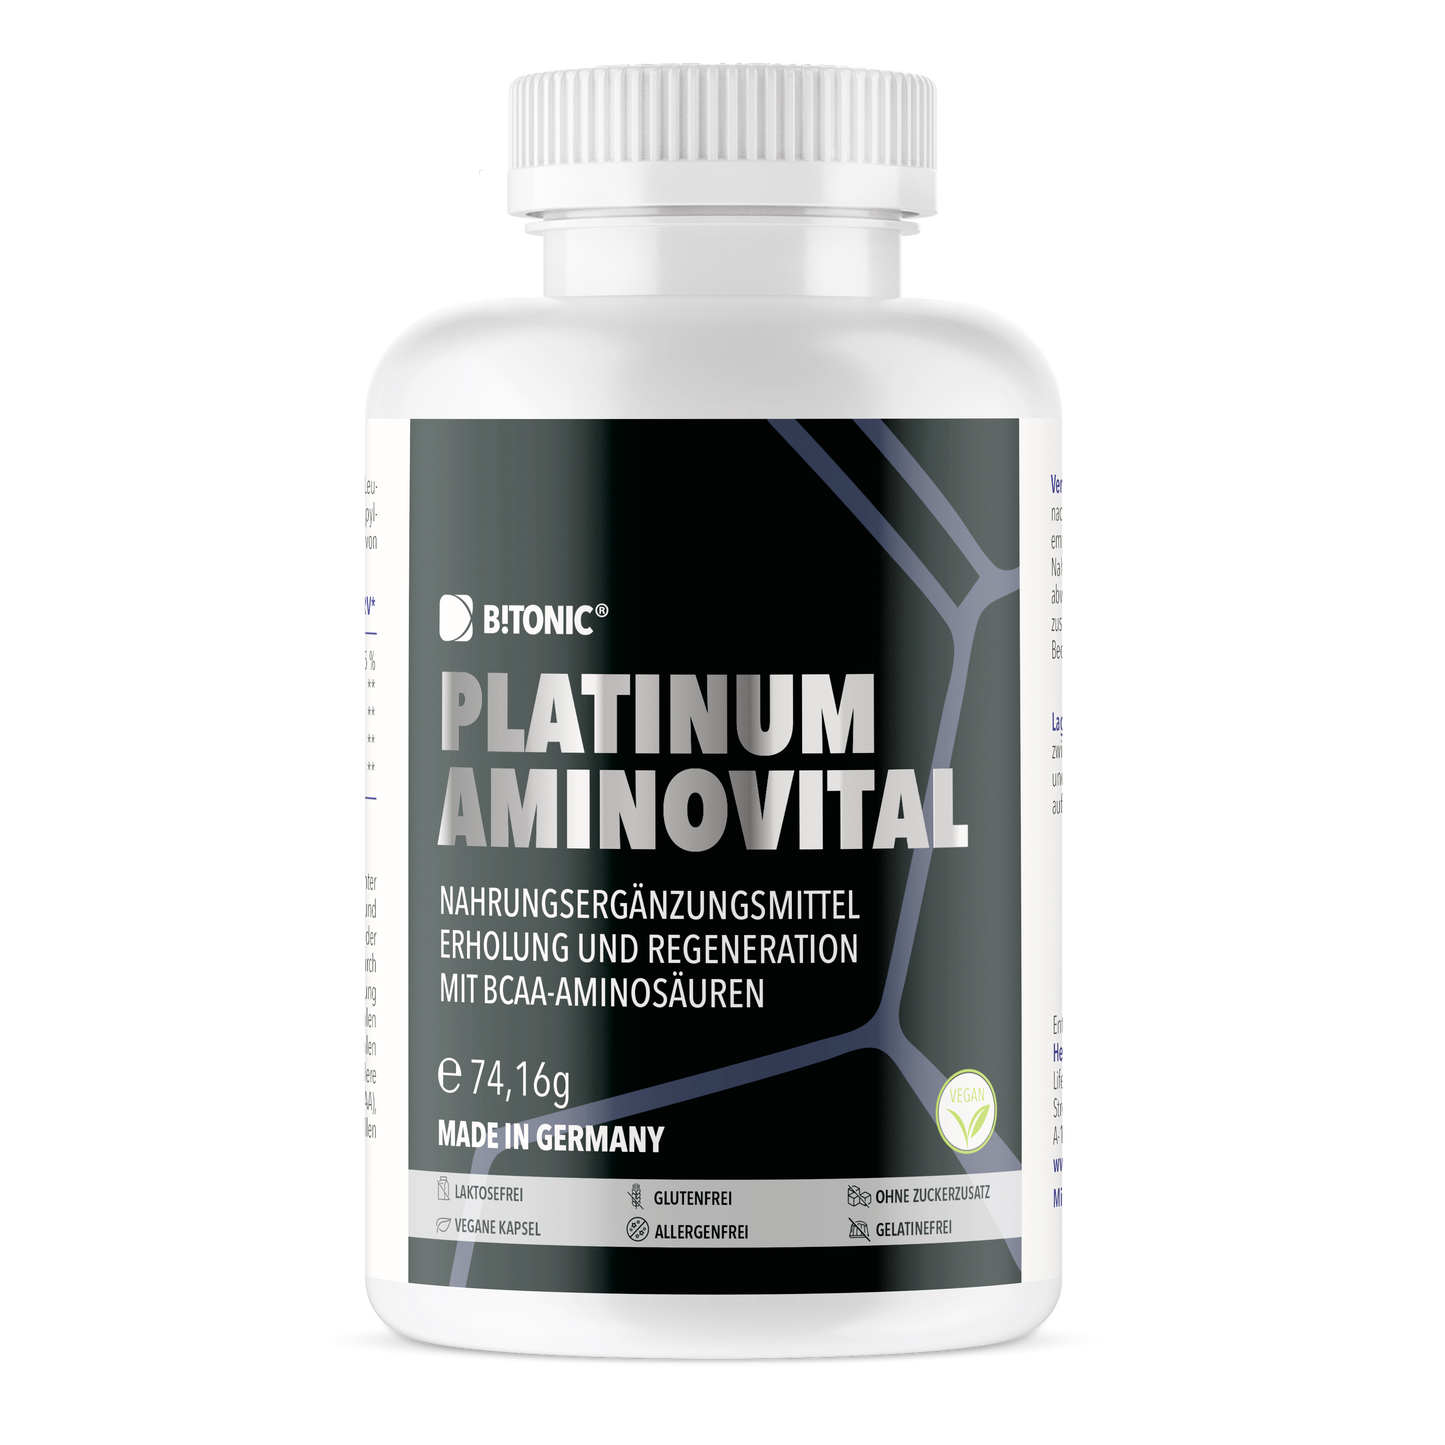 B!TONIC® Platinum Aminovital - The regeneration complex